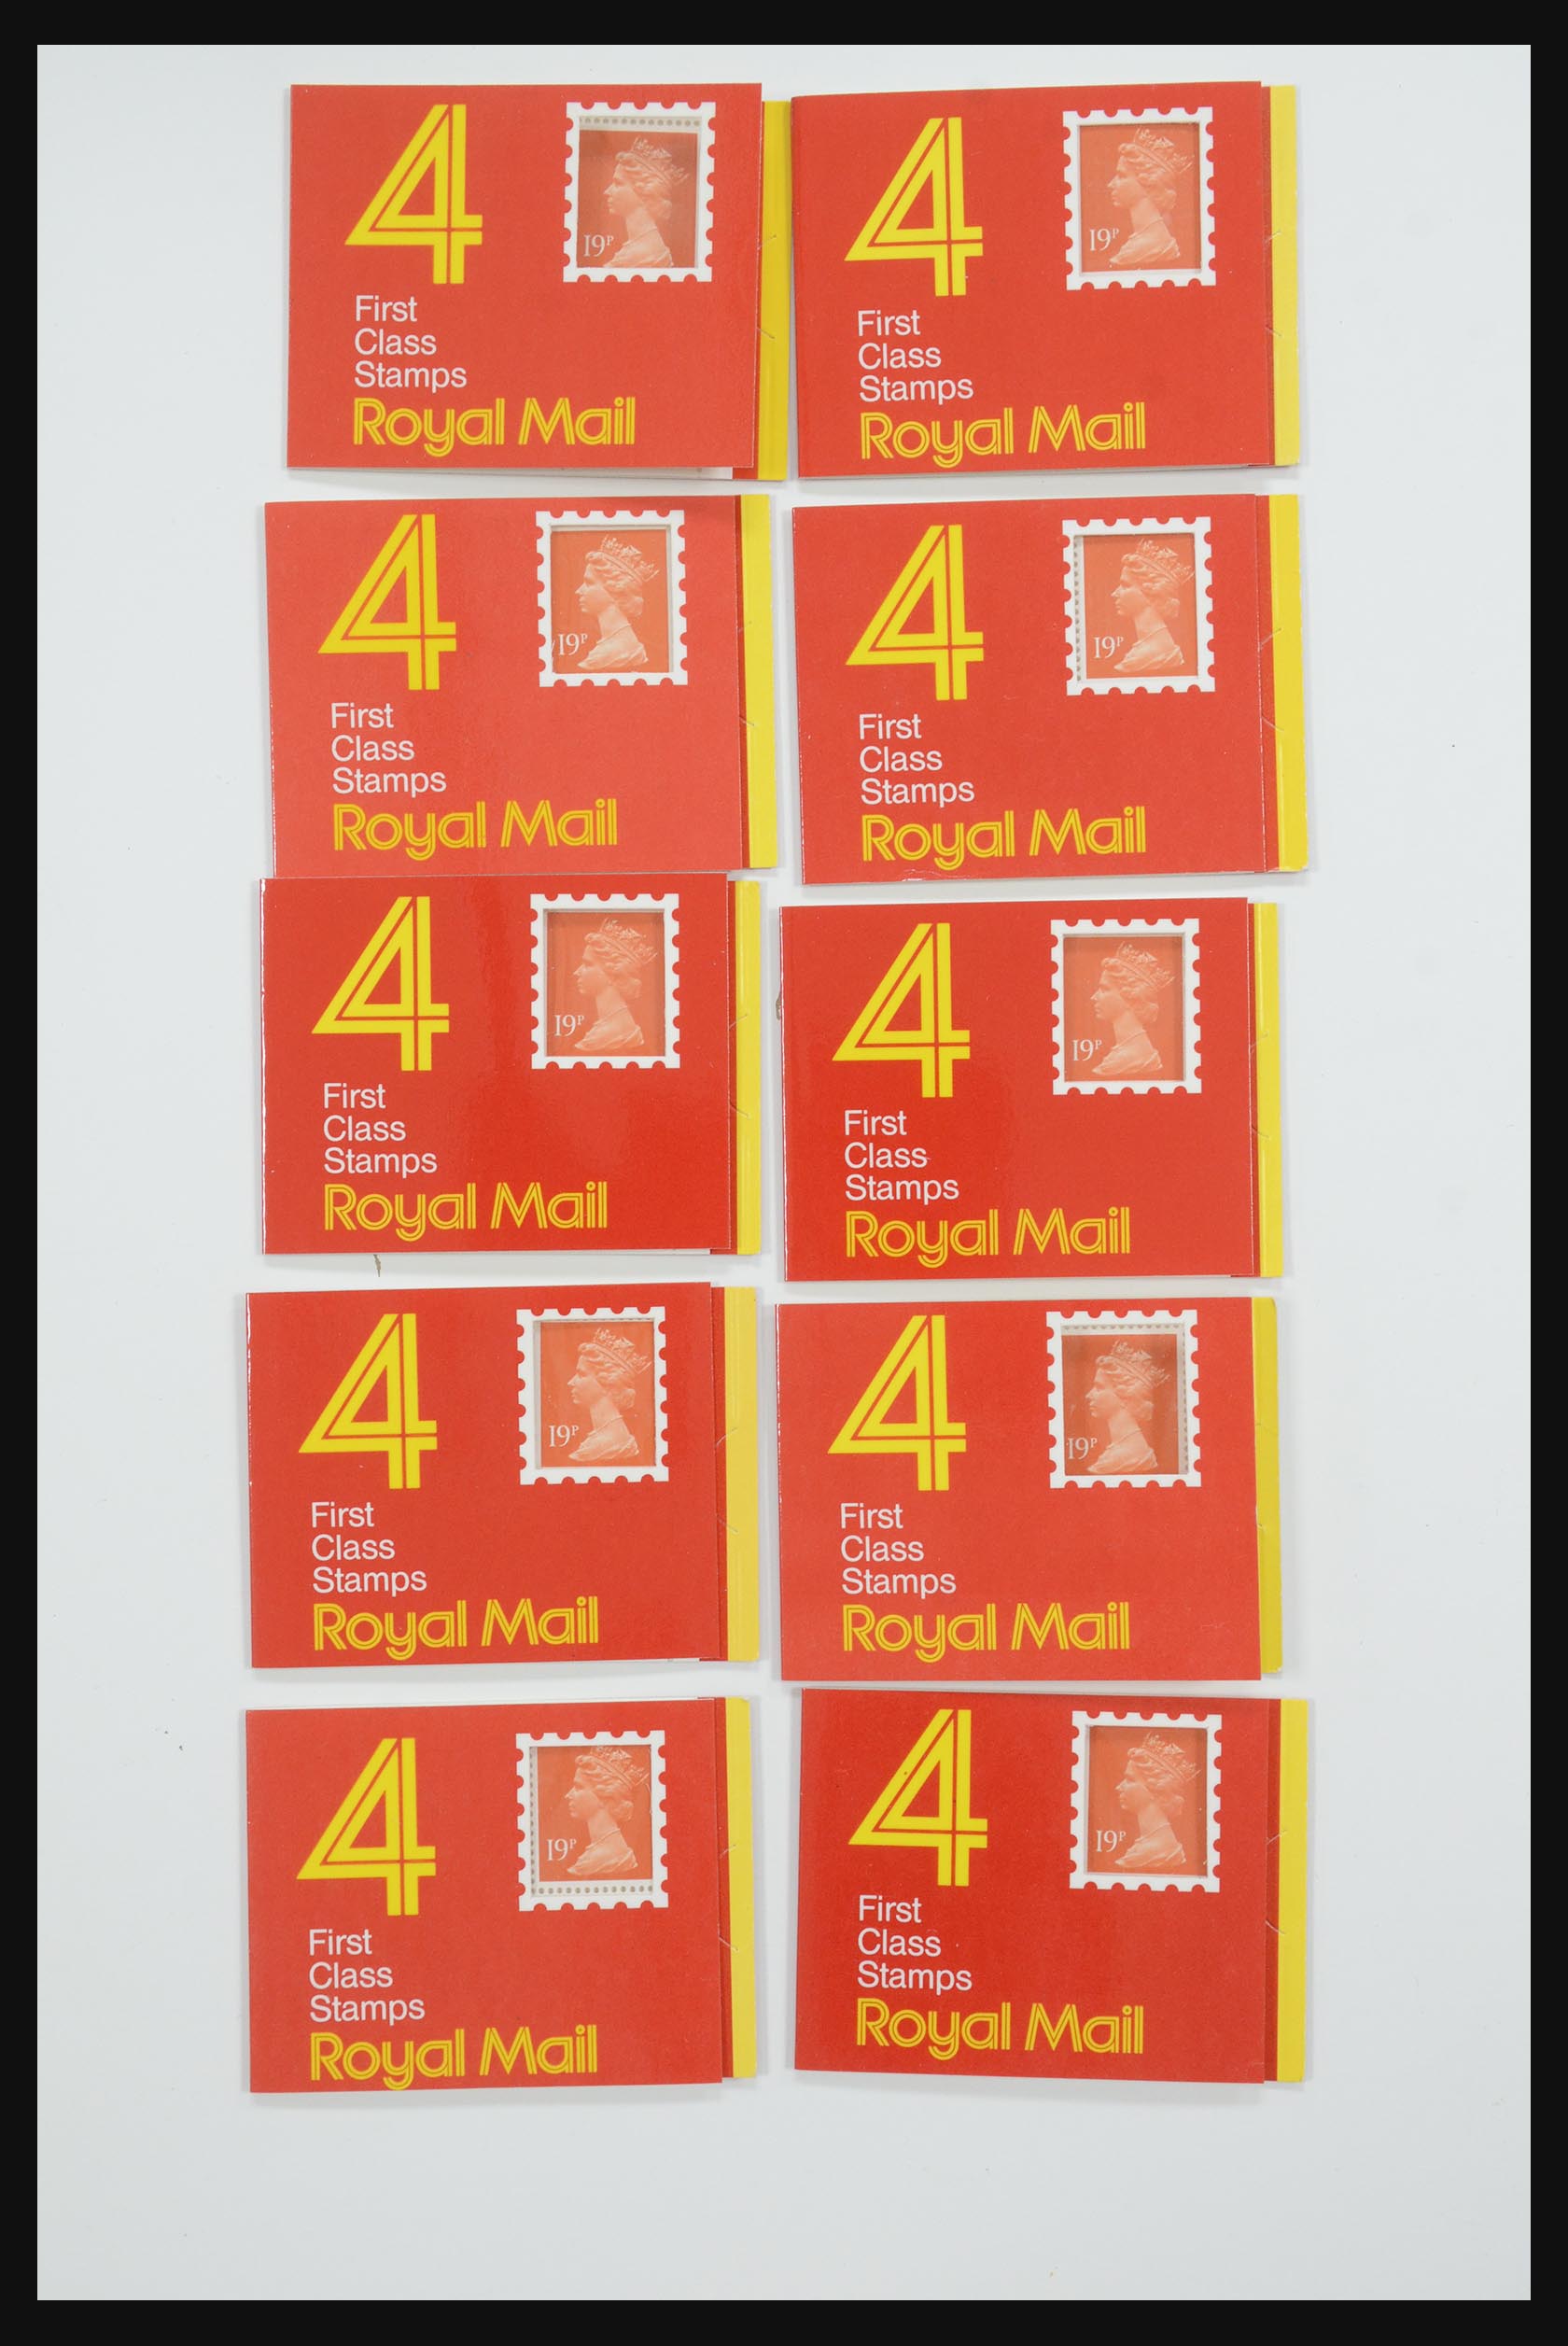 31961 064 - 31961 Great Britain stampbooklets 1971-1999.